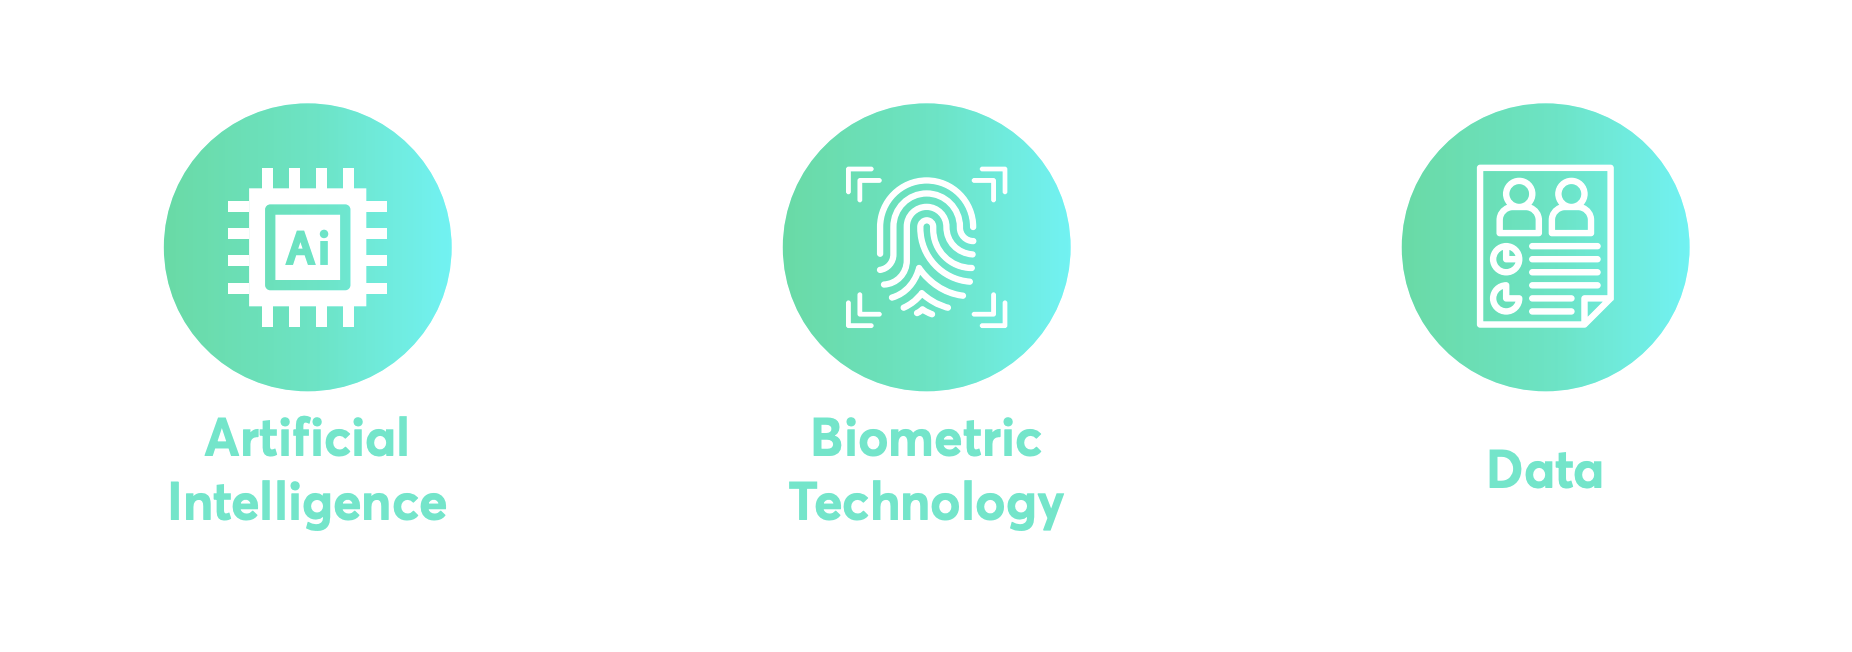 Artificial_Intelligence_Biometric_Technology_Data